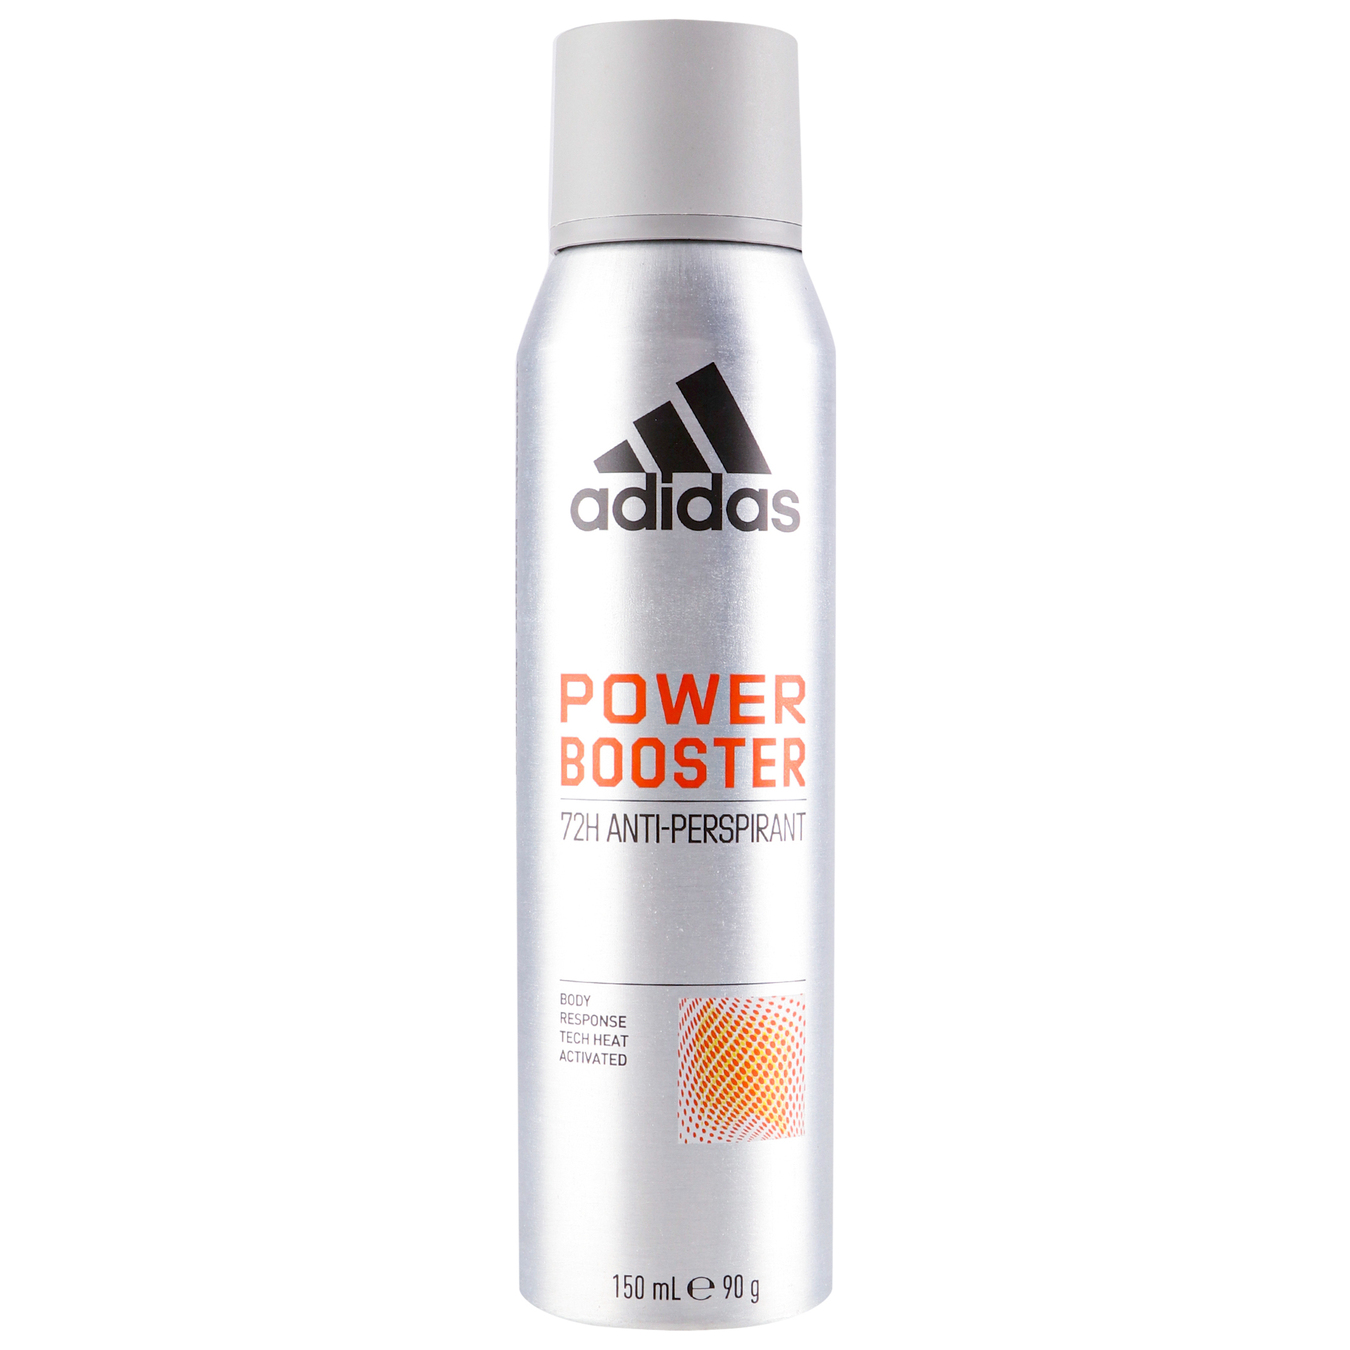 Deodorant Adidas Power Booster men's spray 150ml